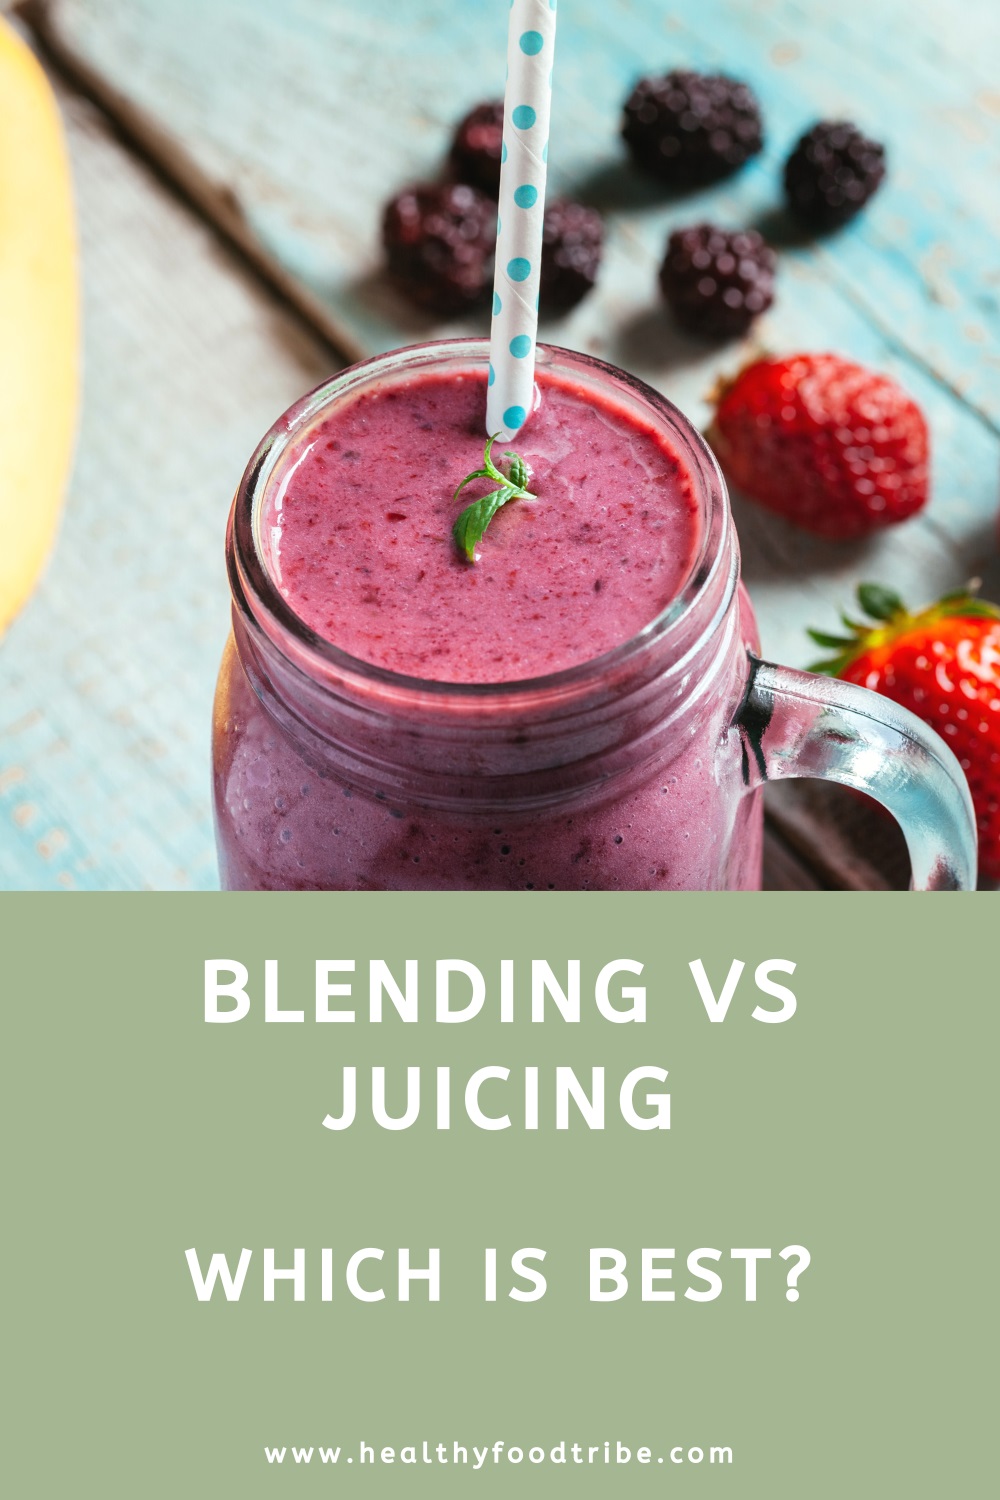 Blending vs juicing (smoothies or juices)